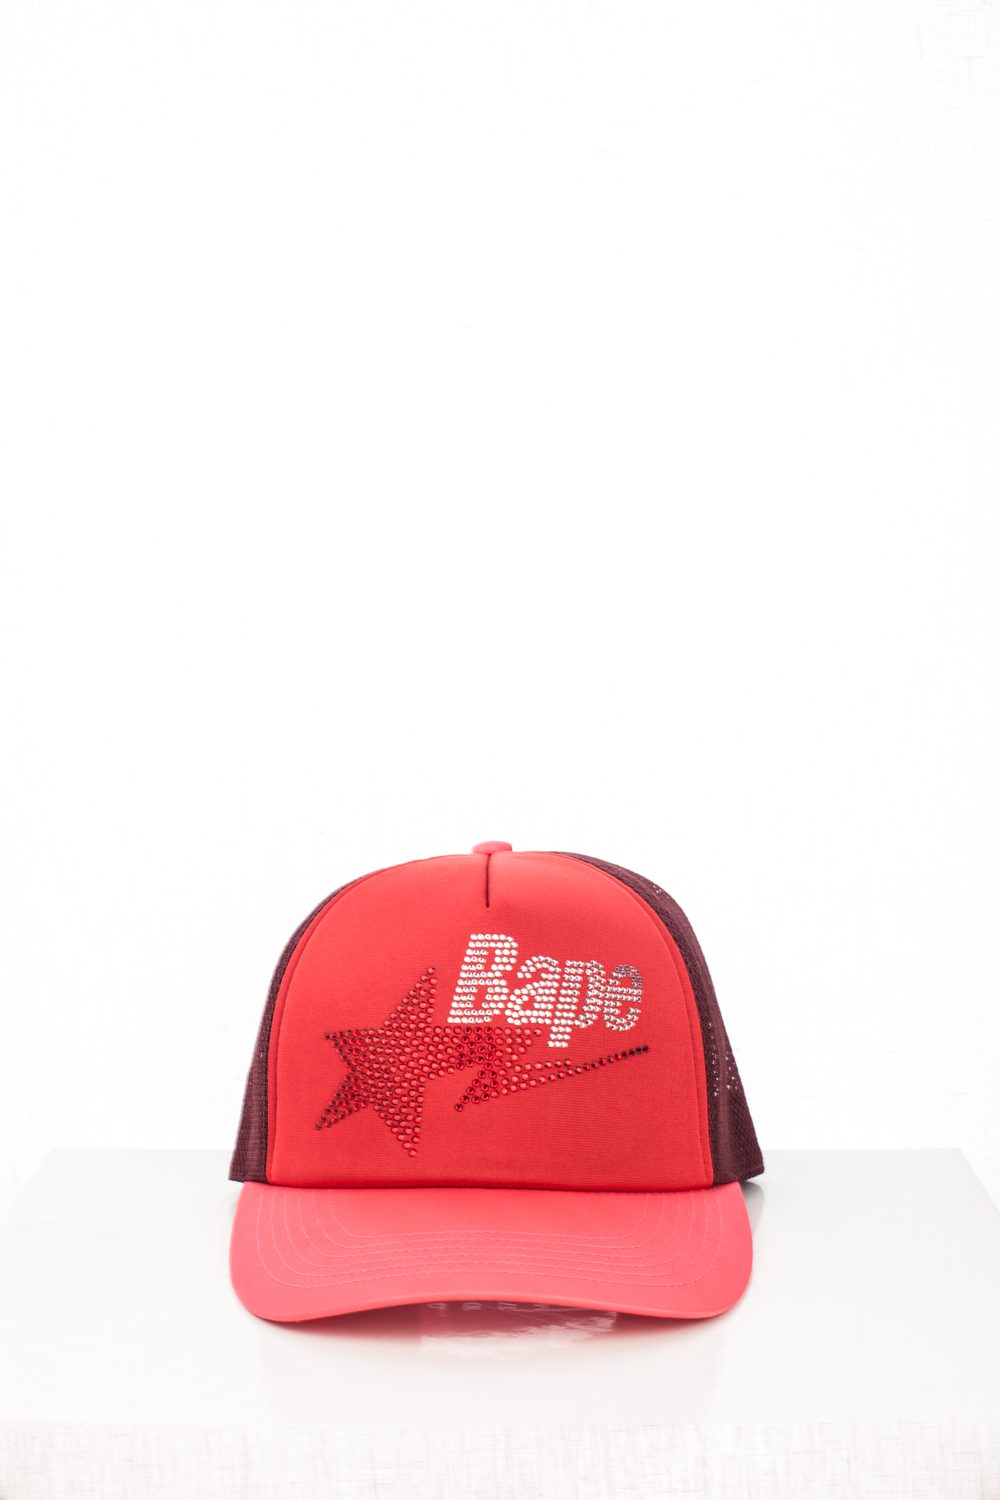 06 “Bapesta” Red Swarovski Trucker Hat